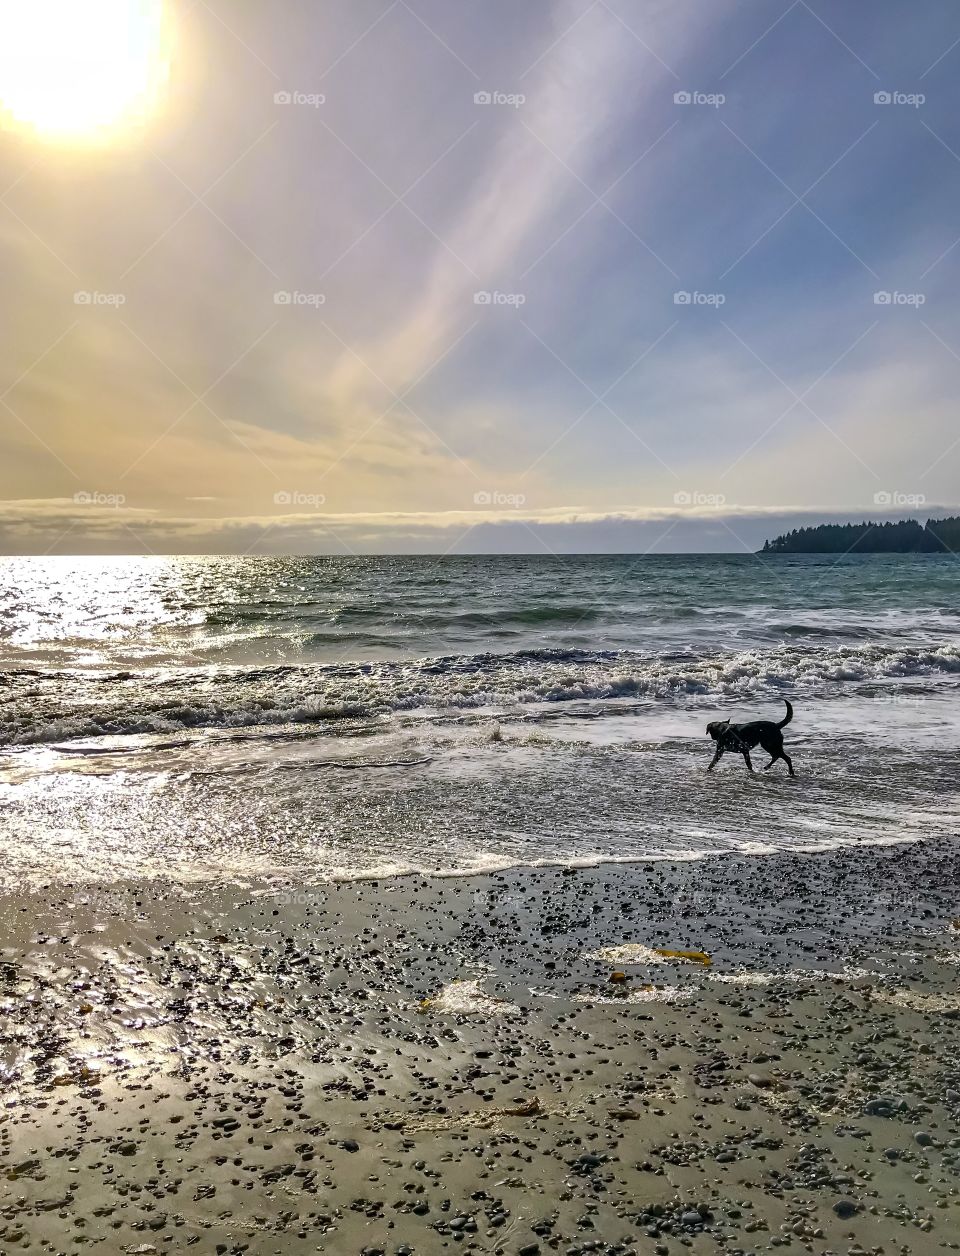 Dog walking on ocean beach with vast scenery in background 